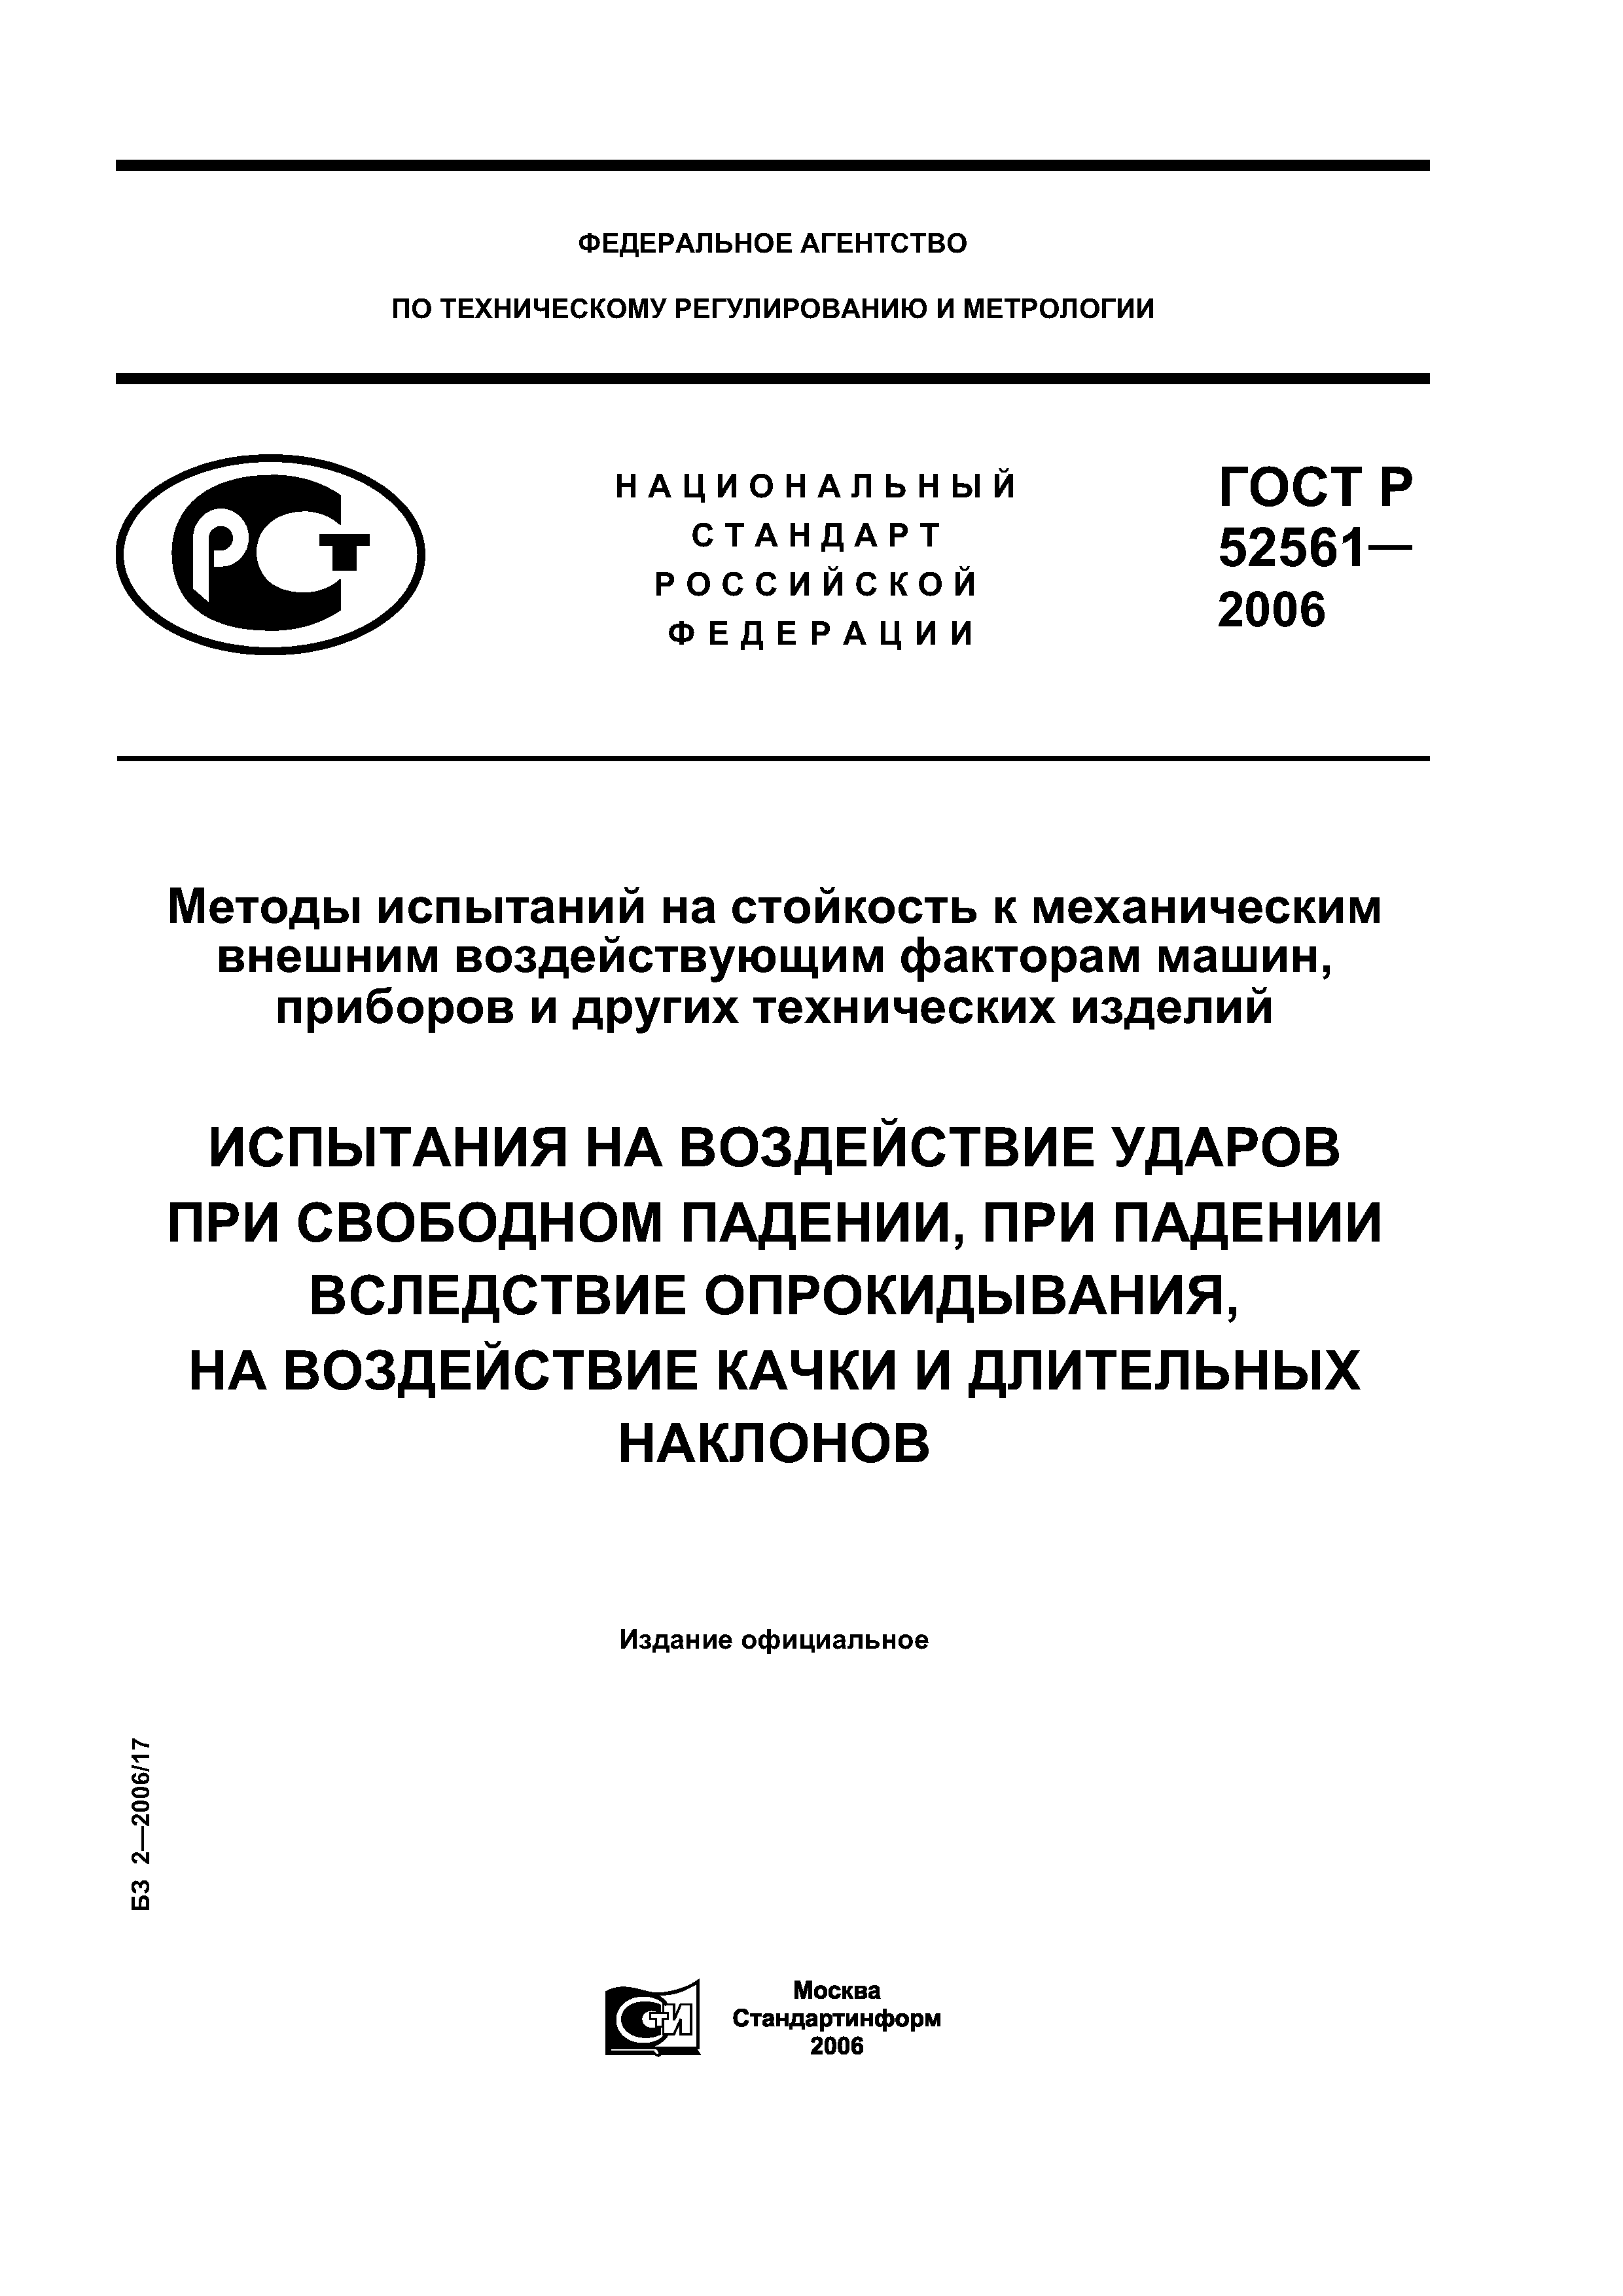 ГОСТ Р 52561-2006